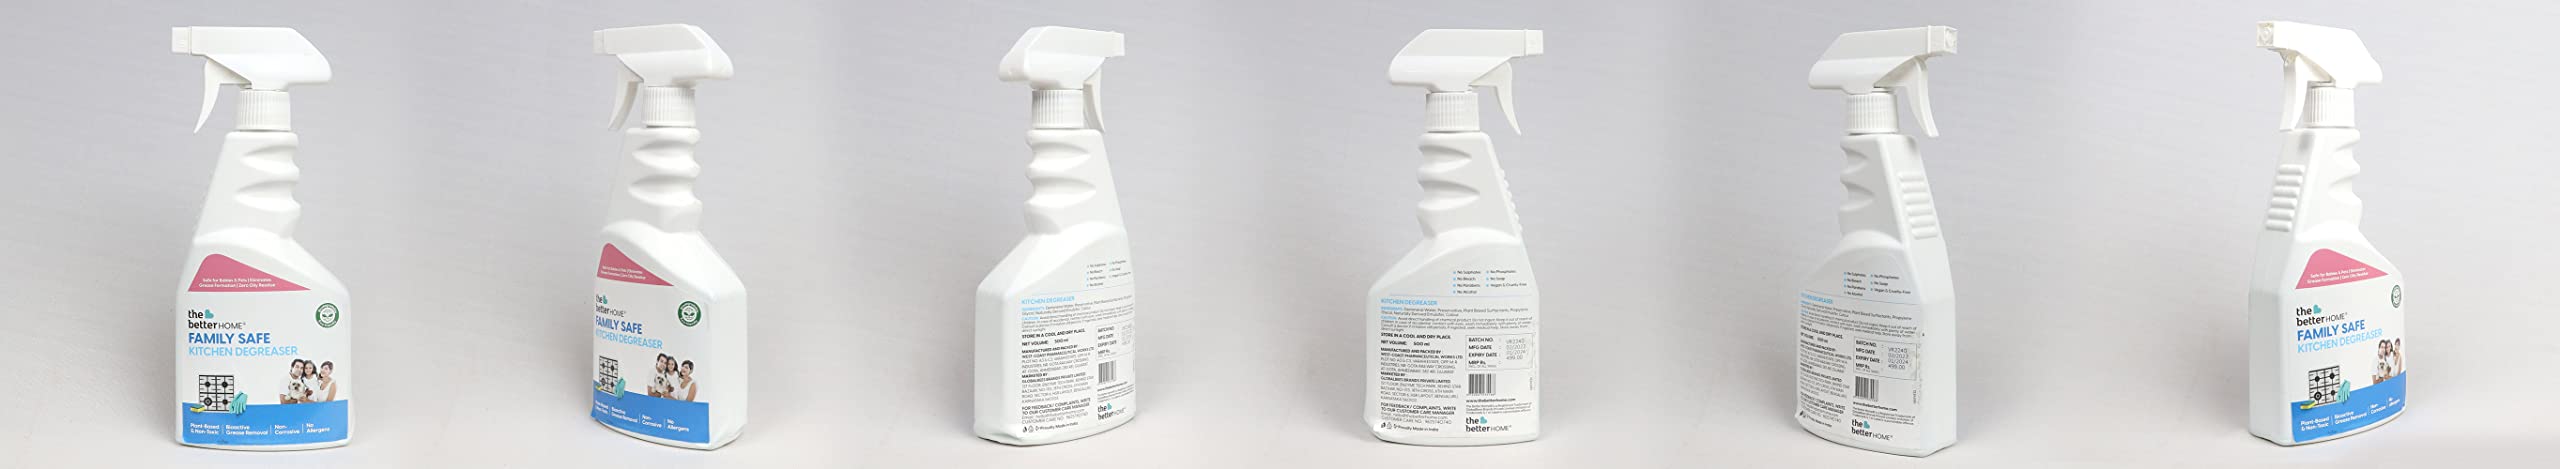 Degreasing Kitchen Cleaner Spray (500ml) | Non Toxic and Plant Based Kitchen Grease Cleaner Spray | Natural Degreaser Spray for Kitchen